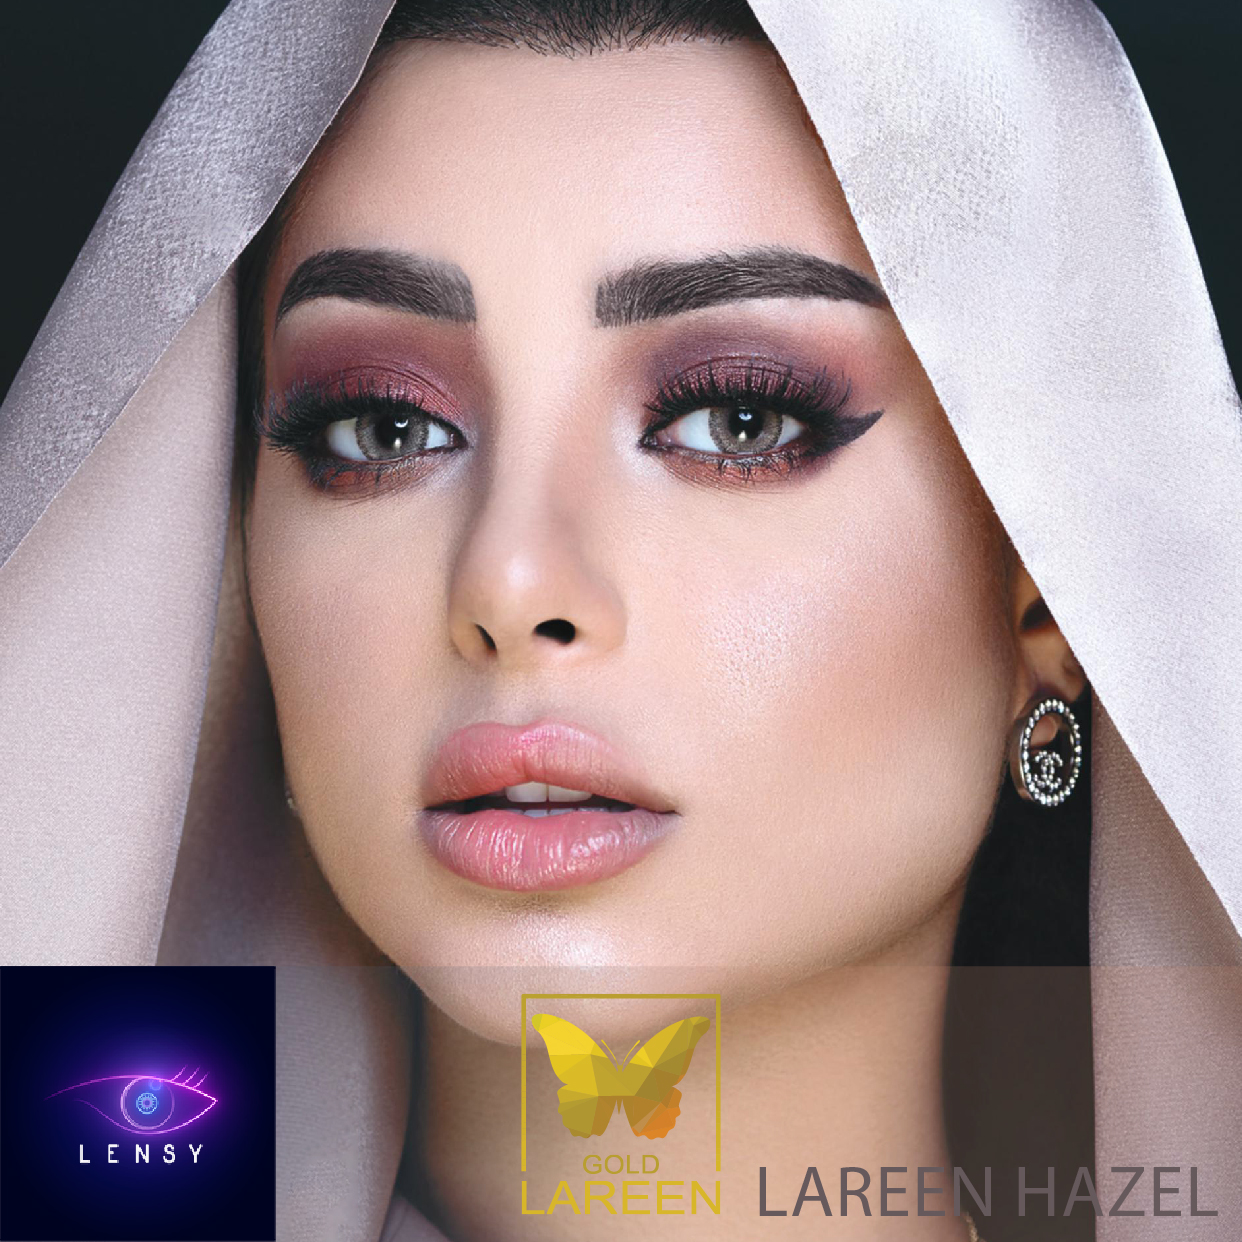 Lareen Hazel